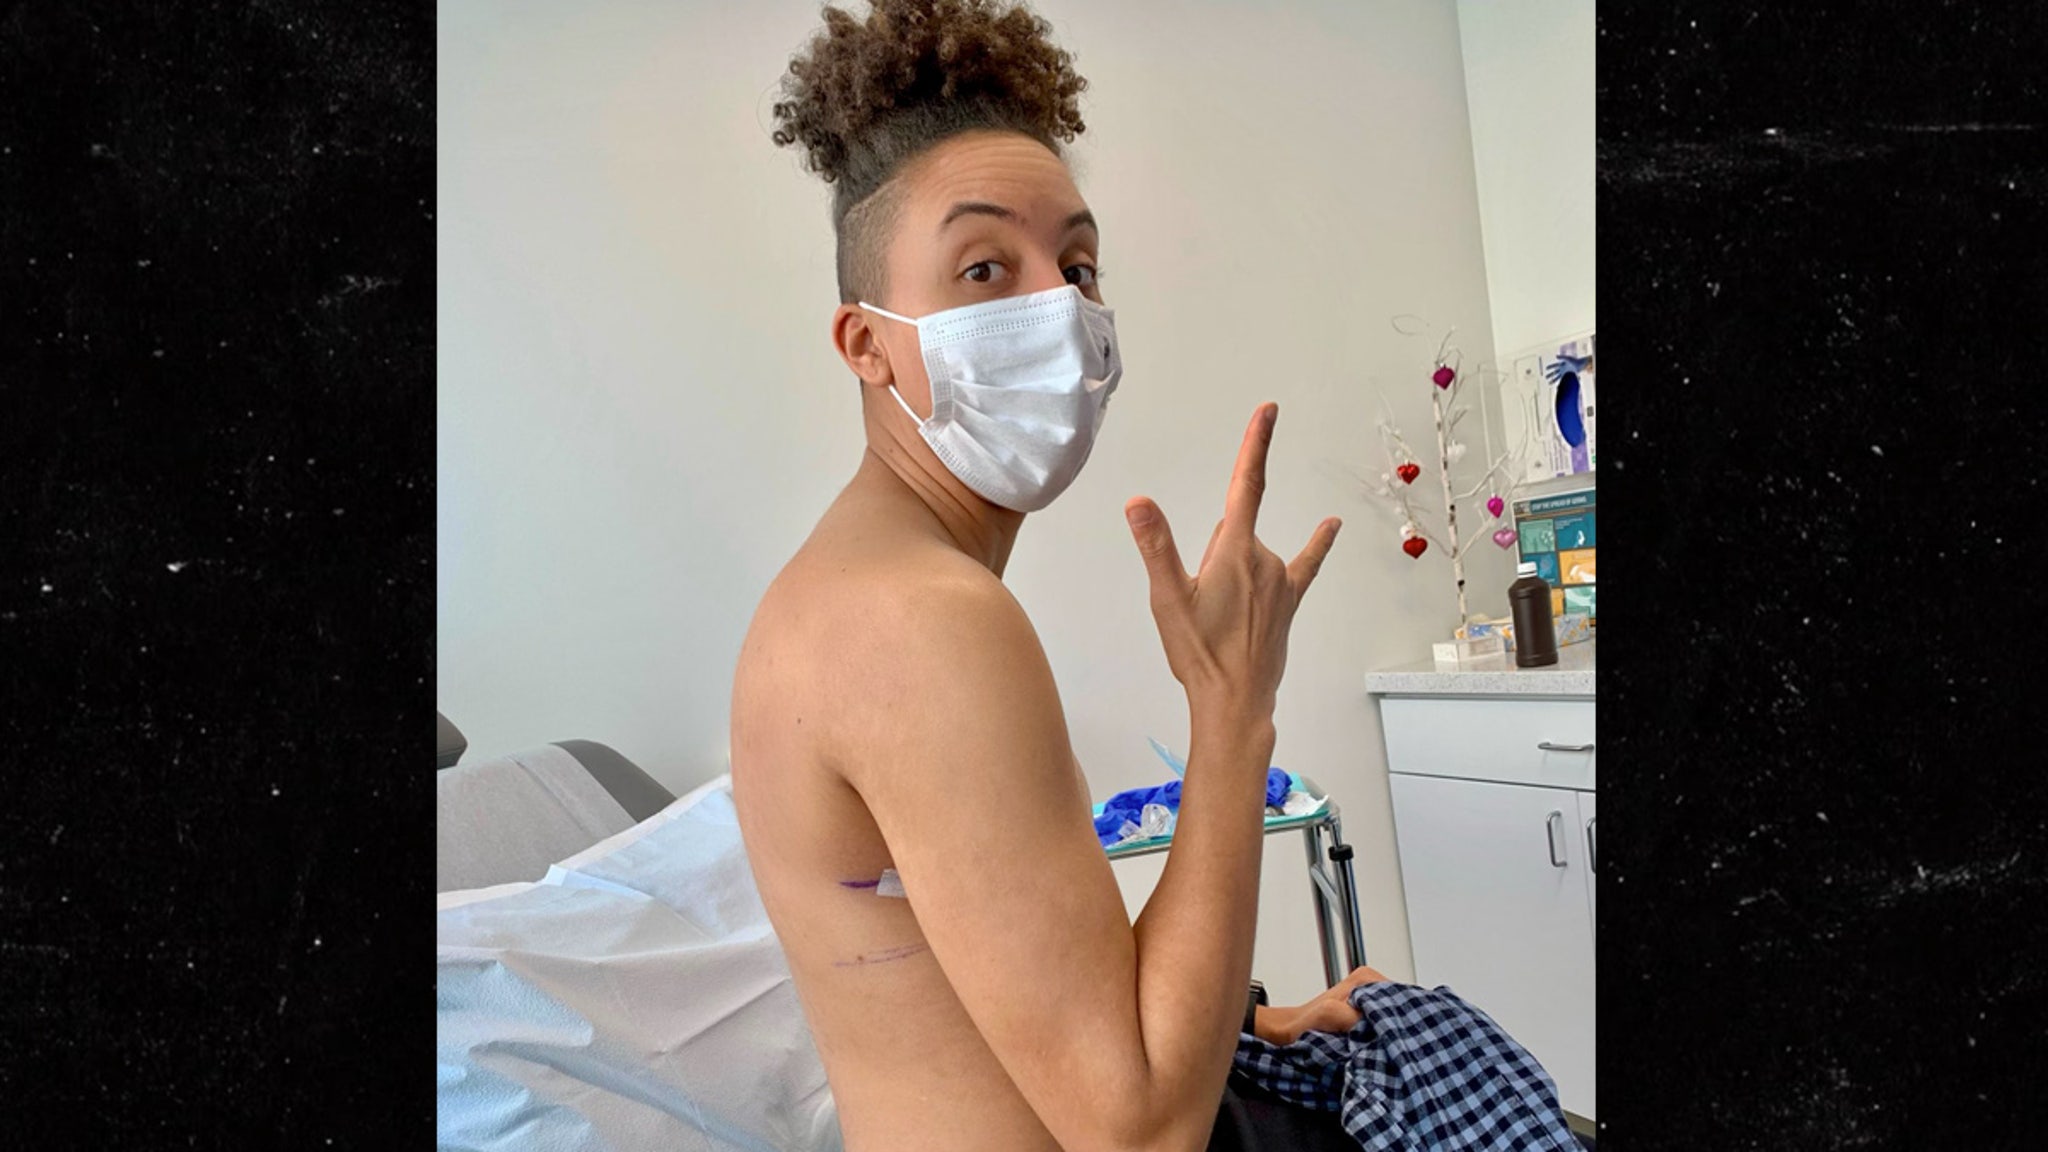 WNBA’s Layshia Clarendon has breast augmentation surgery and hopes to inspire trans athletes